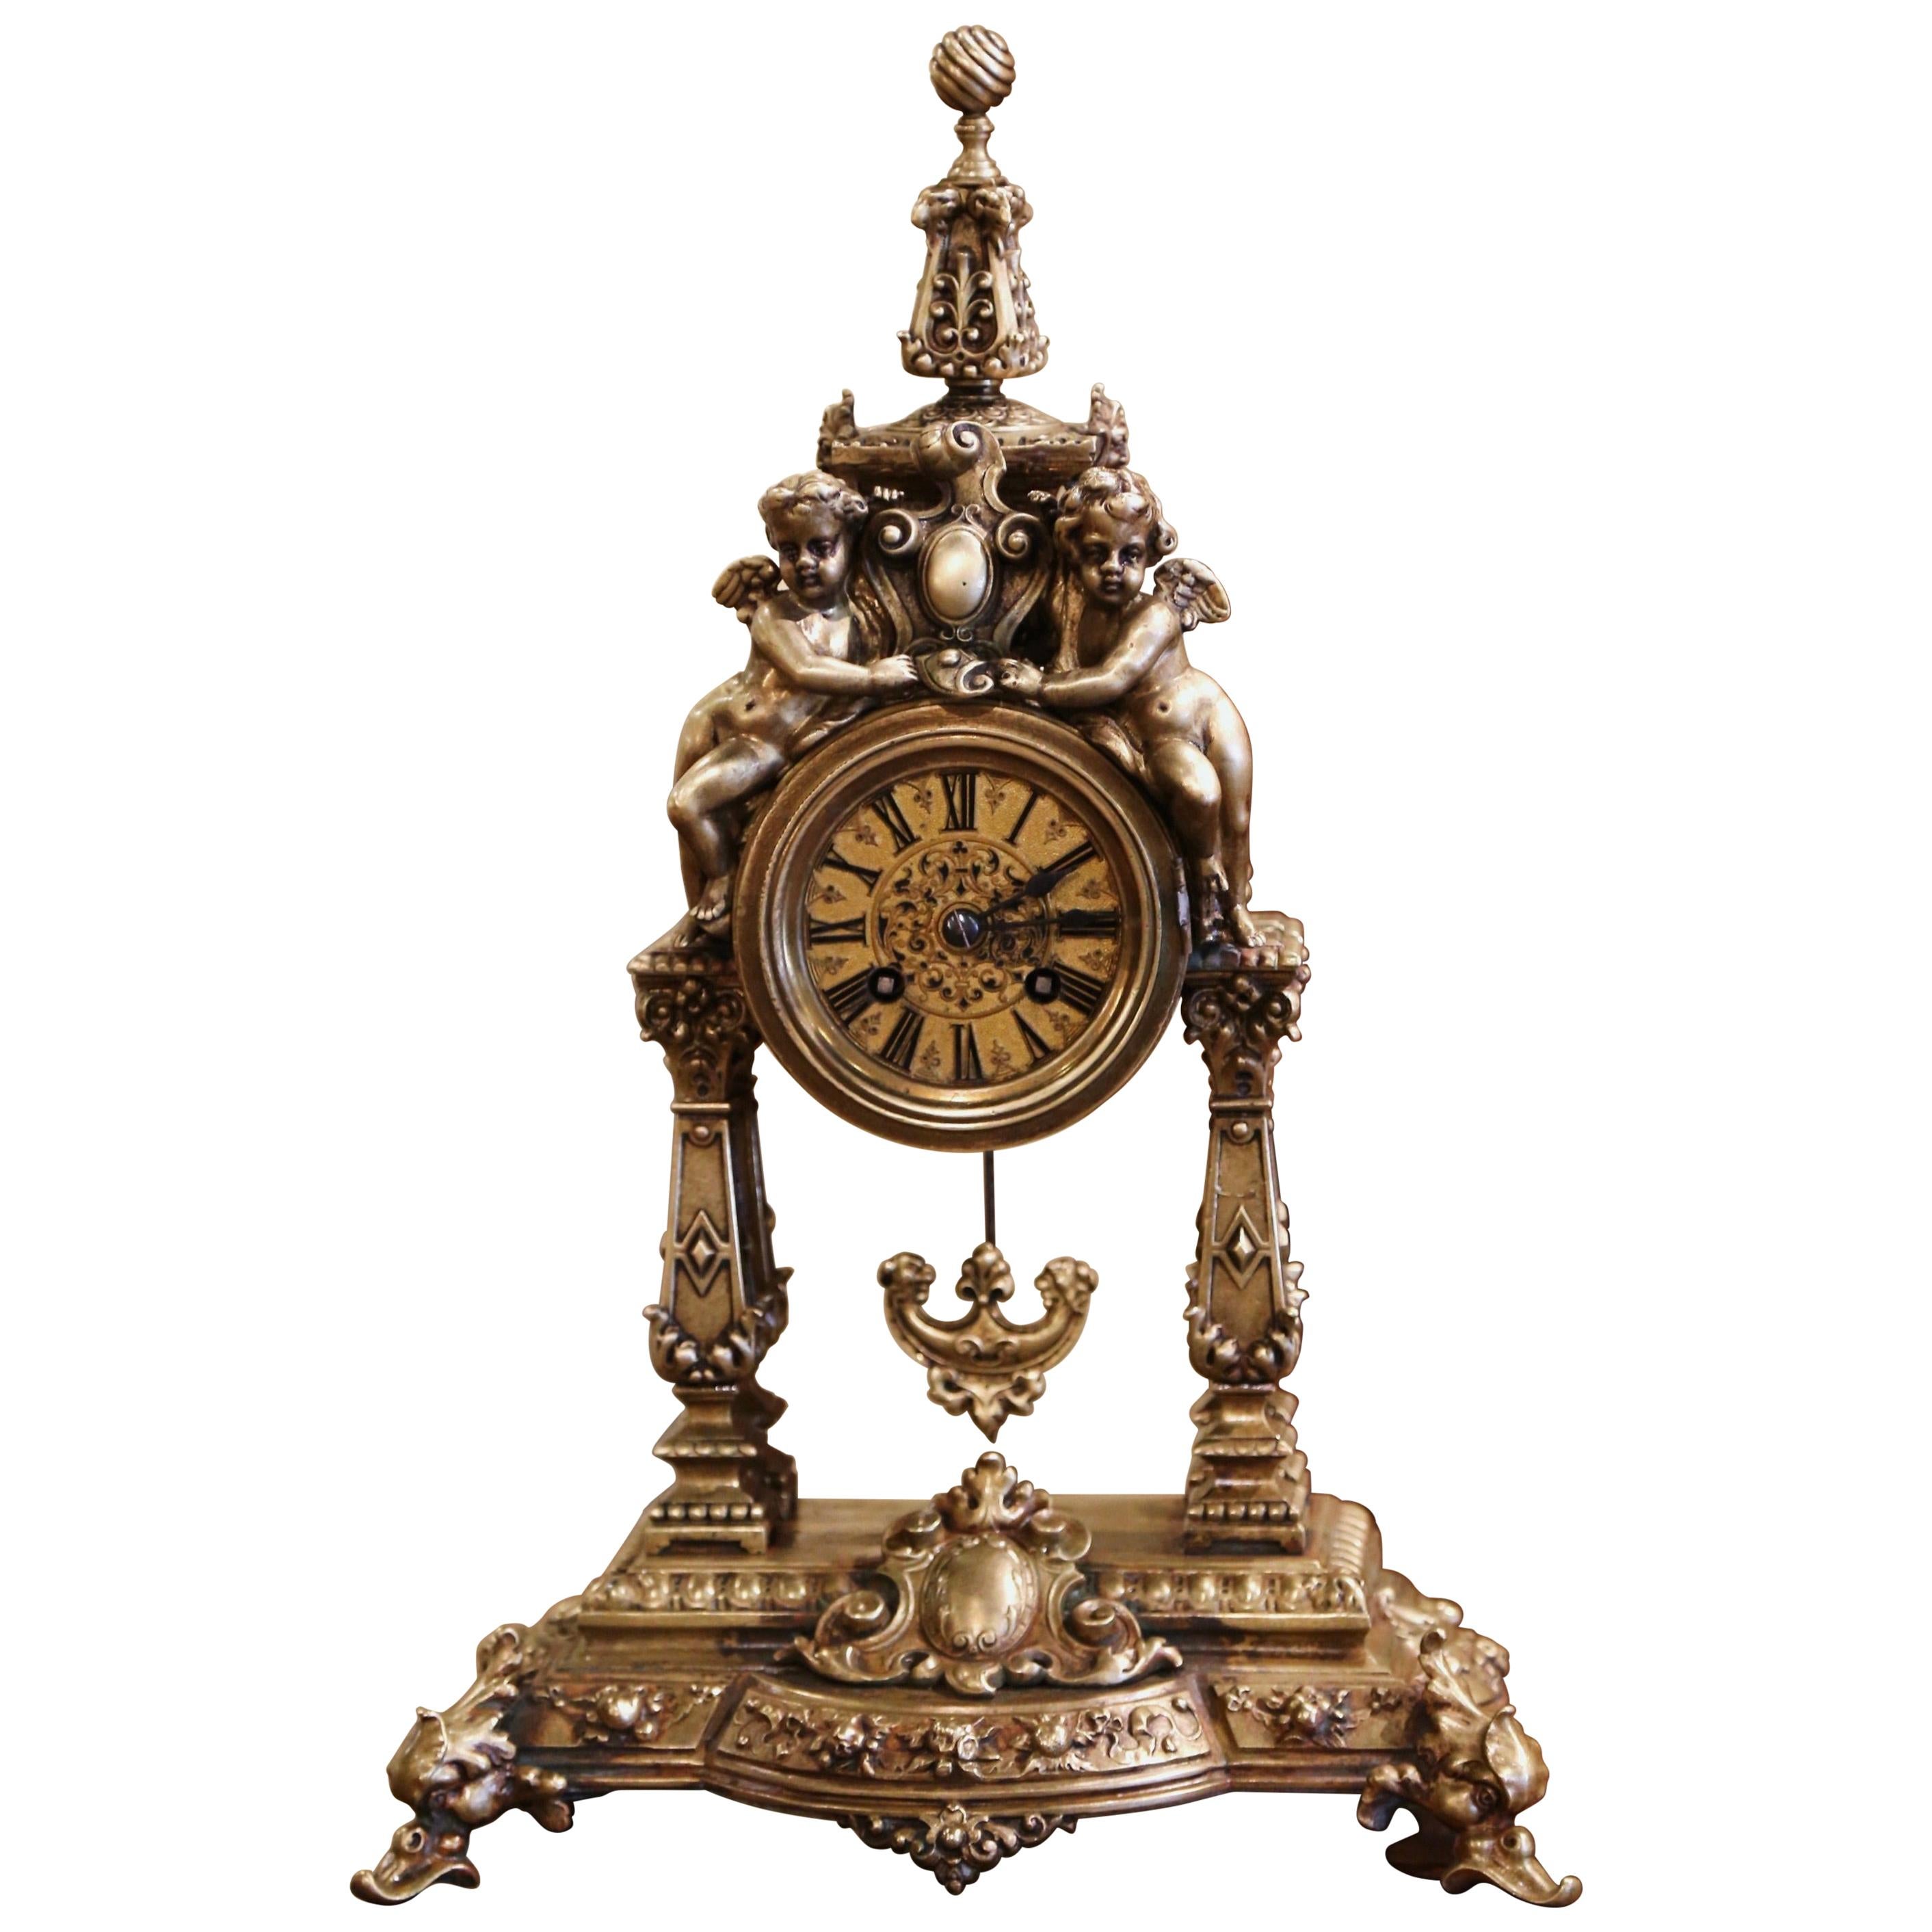 19th Century French Louis XV Rococo Gilt Bronze Mantel Clock with Cherubs